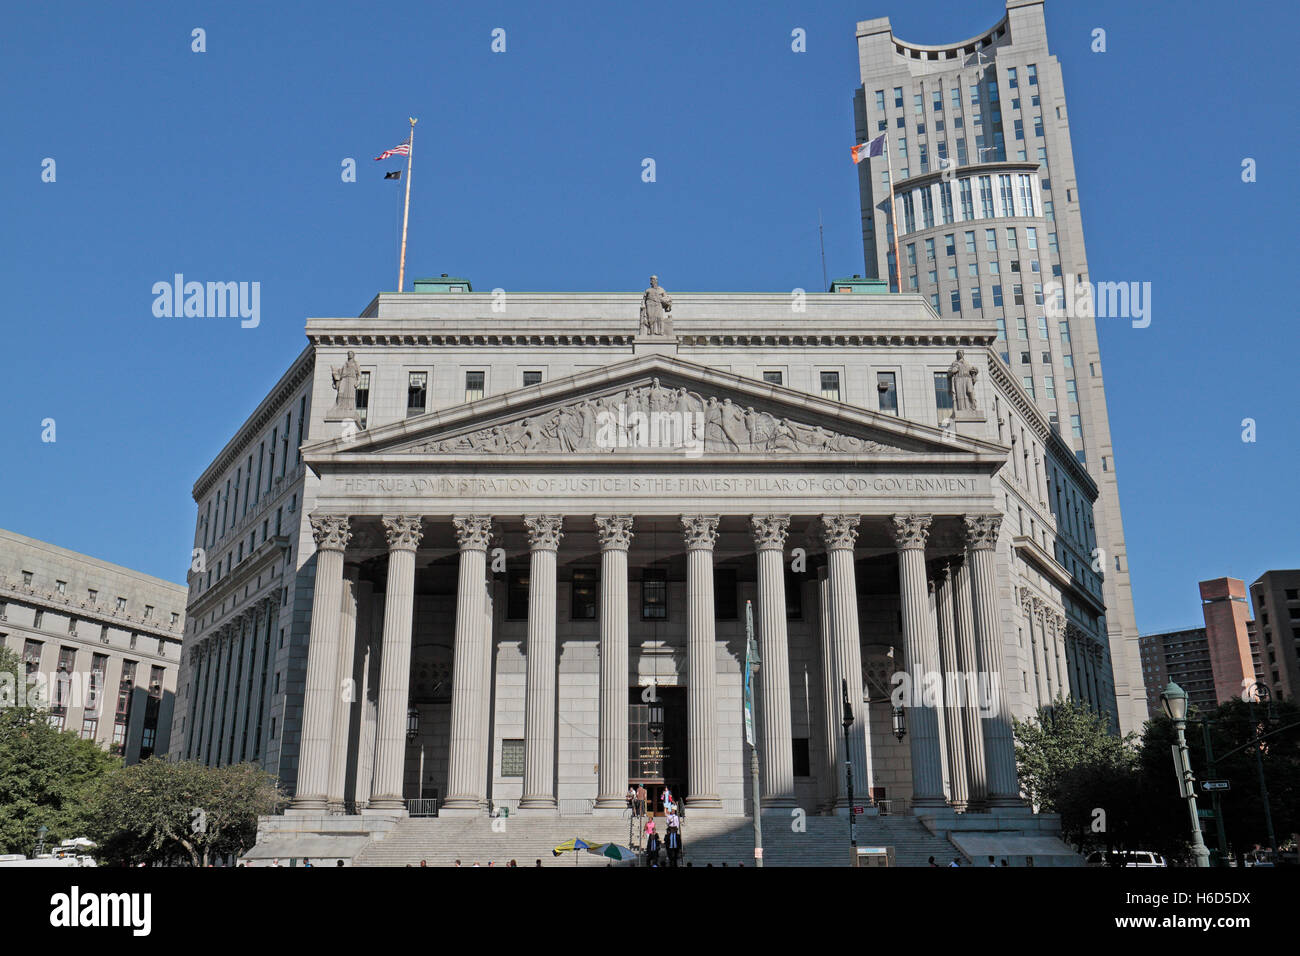 La Cour Suprême de New York County, Foley Square, Manhattan, New York, United States. Banque D'Images